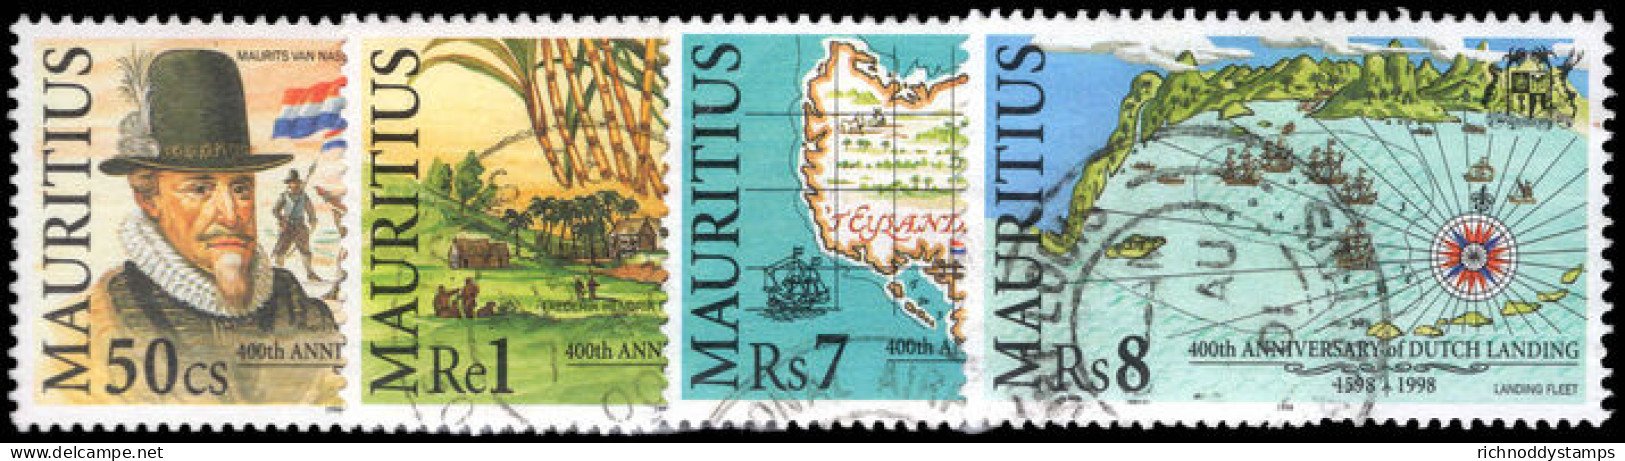 Mauritius 1998 40th Anniv Of Dutch Landing On Mauritius Fine Used. - Maurice (1968-...)